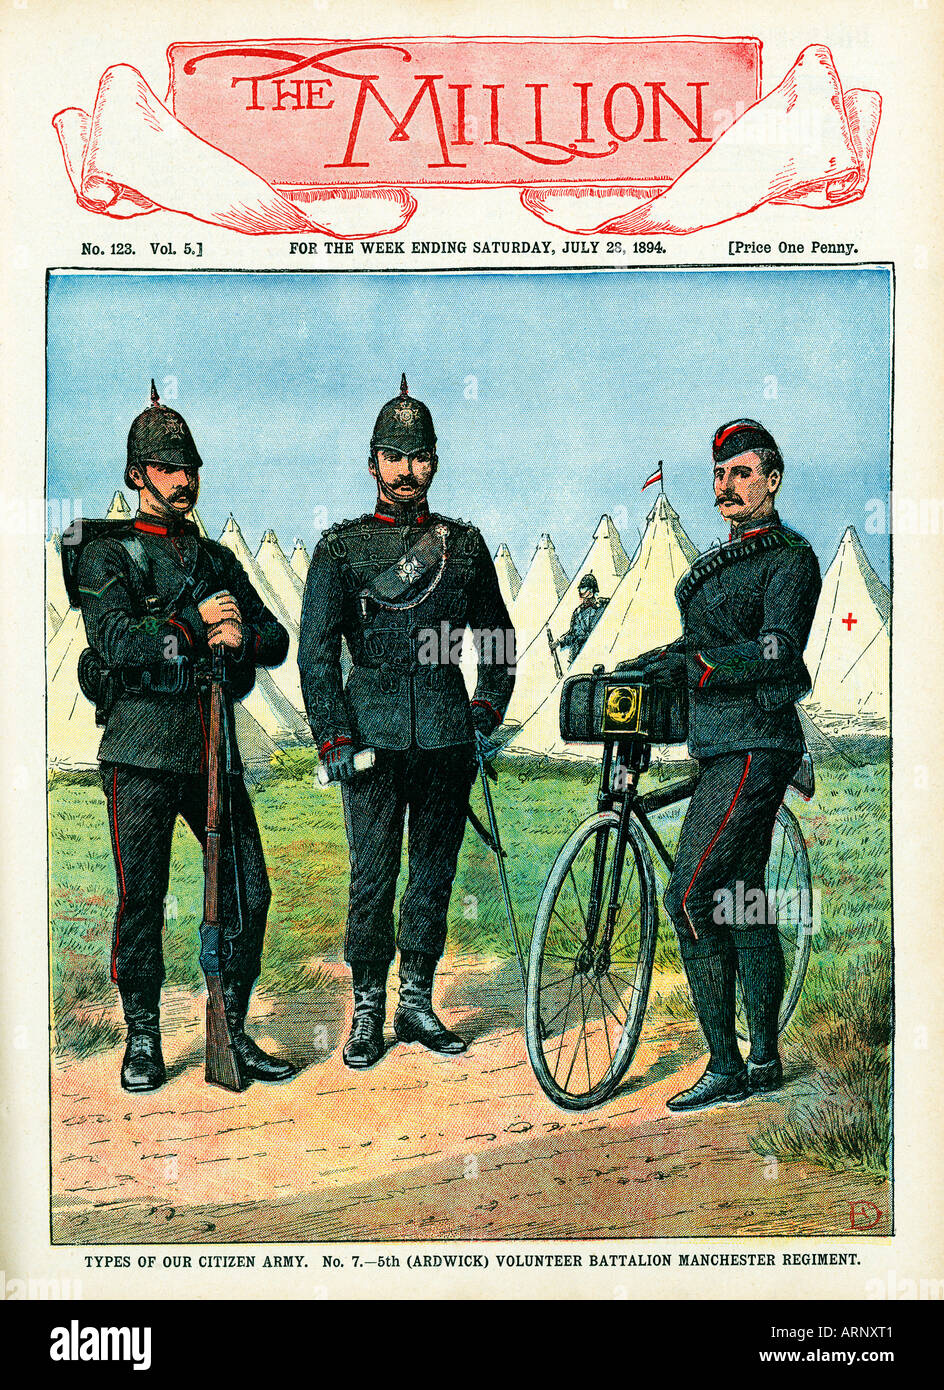 Manchester Regiment Volunteers the popular Victorian magazine The Million with the 5th Ardwick Volunteer Battalion Stock Photo